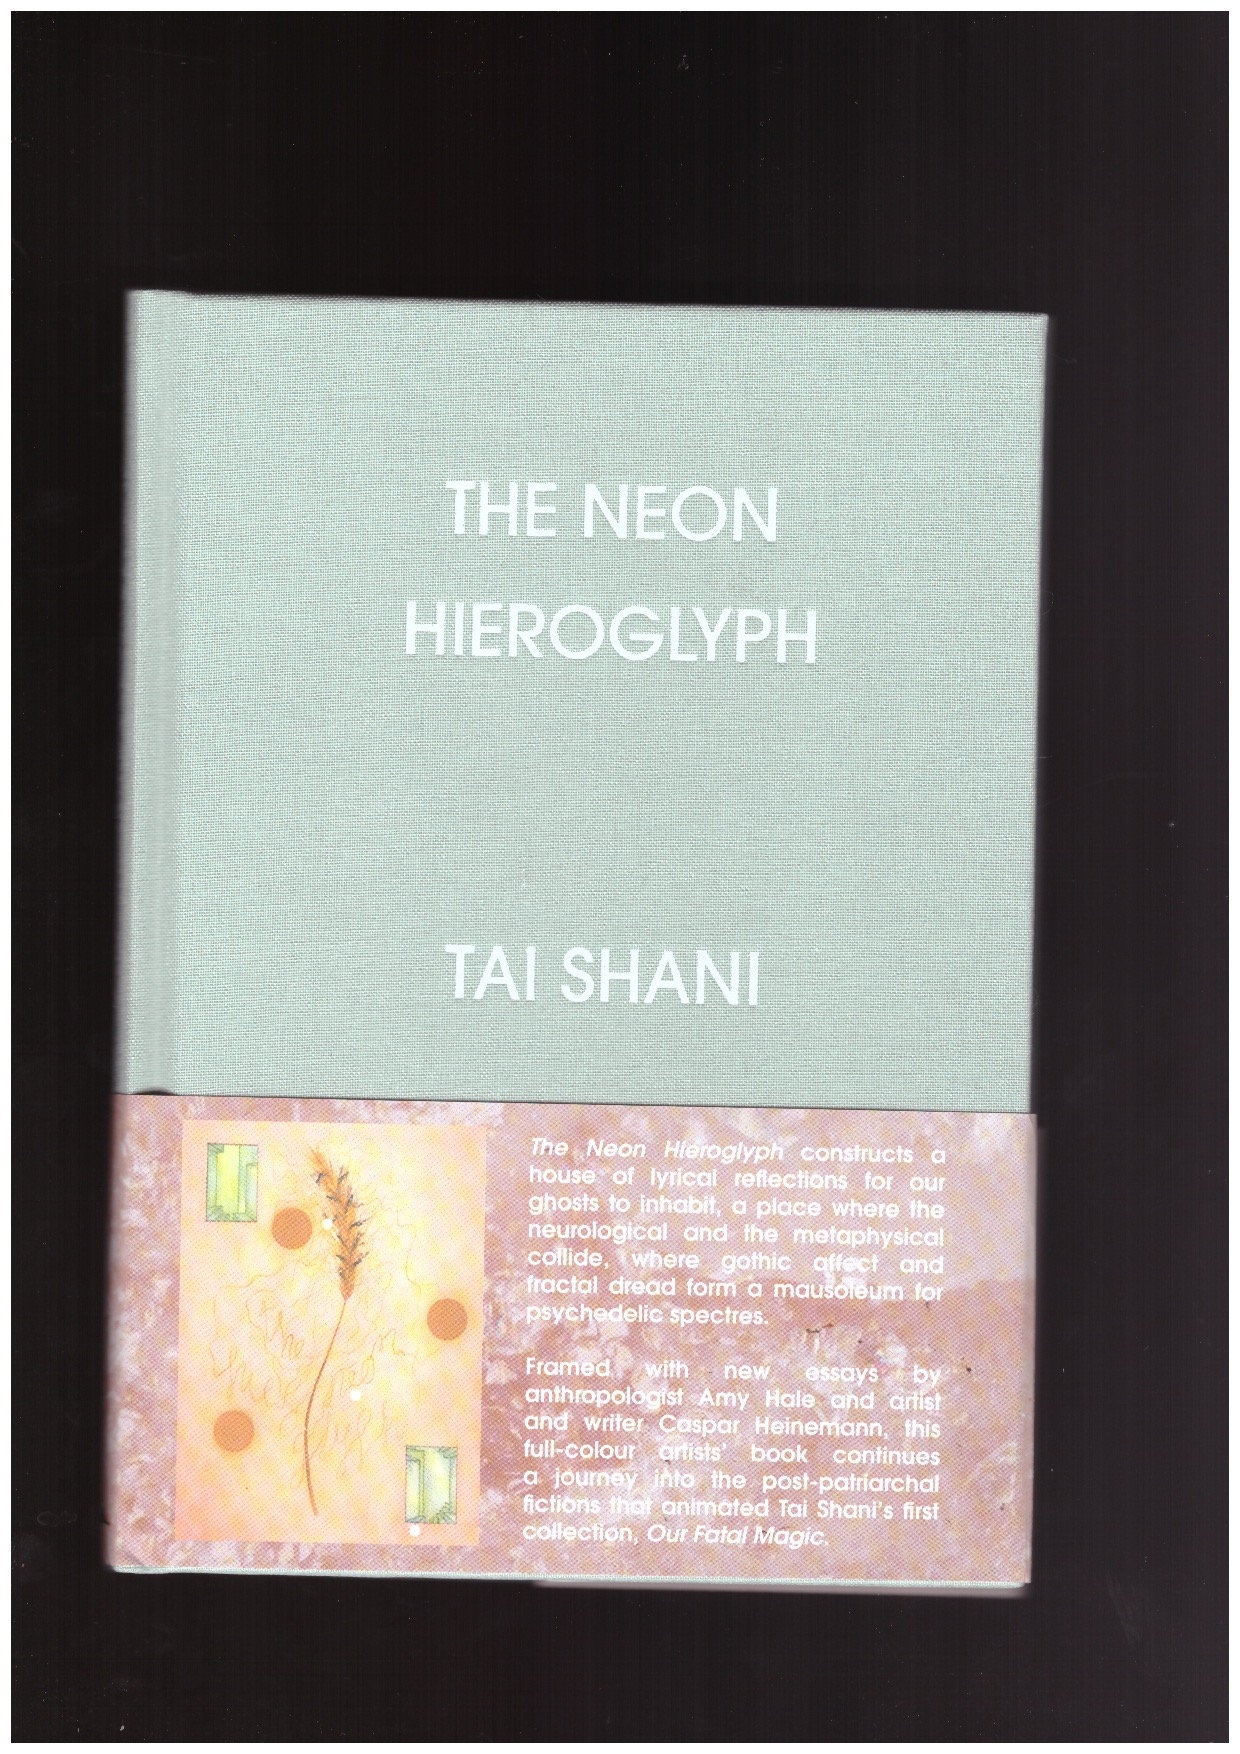 SHANI, Tai - The Neon Hieroglyph